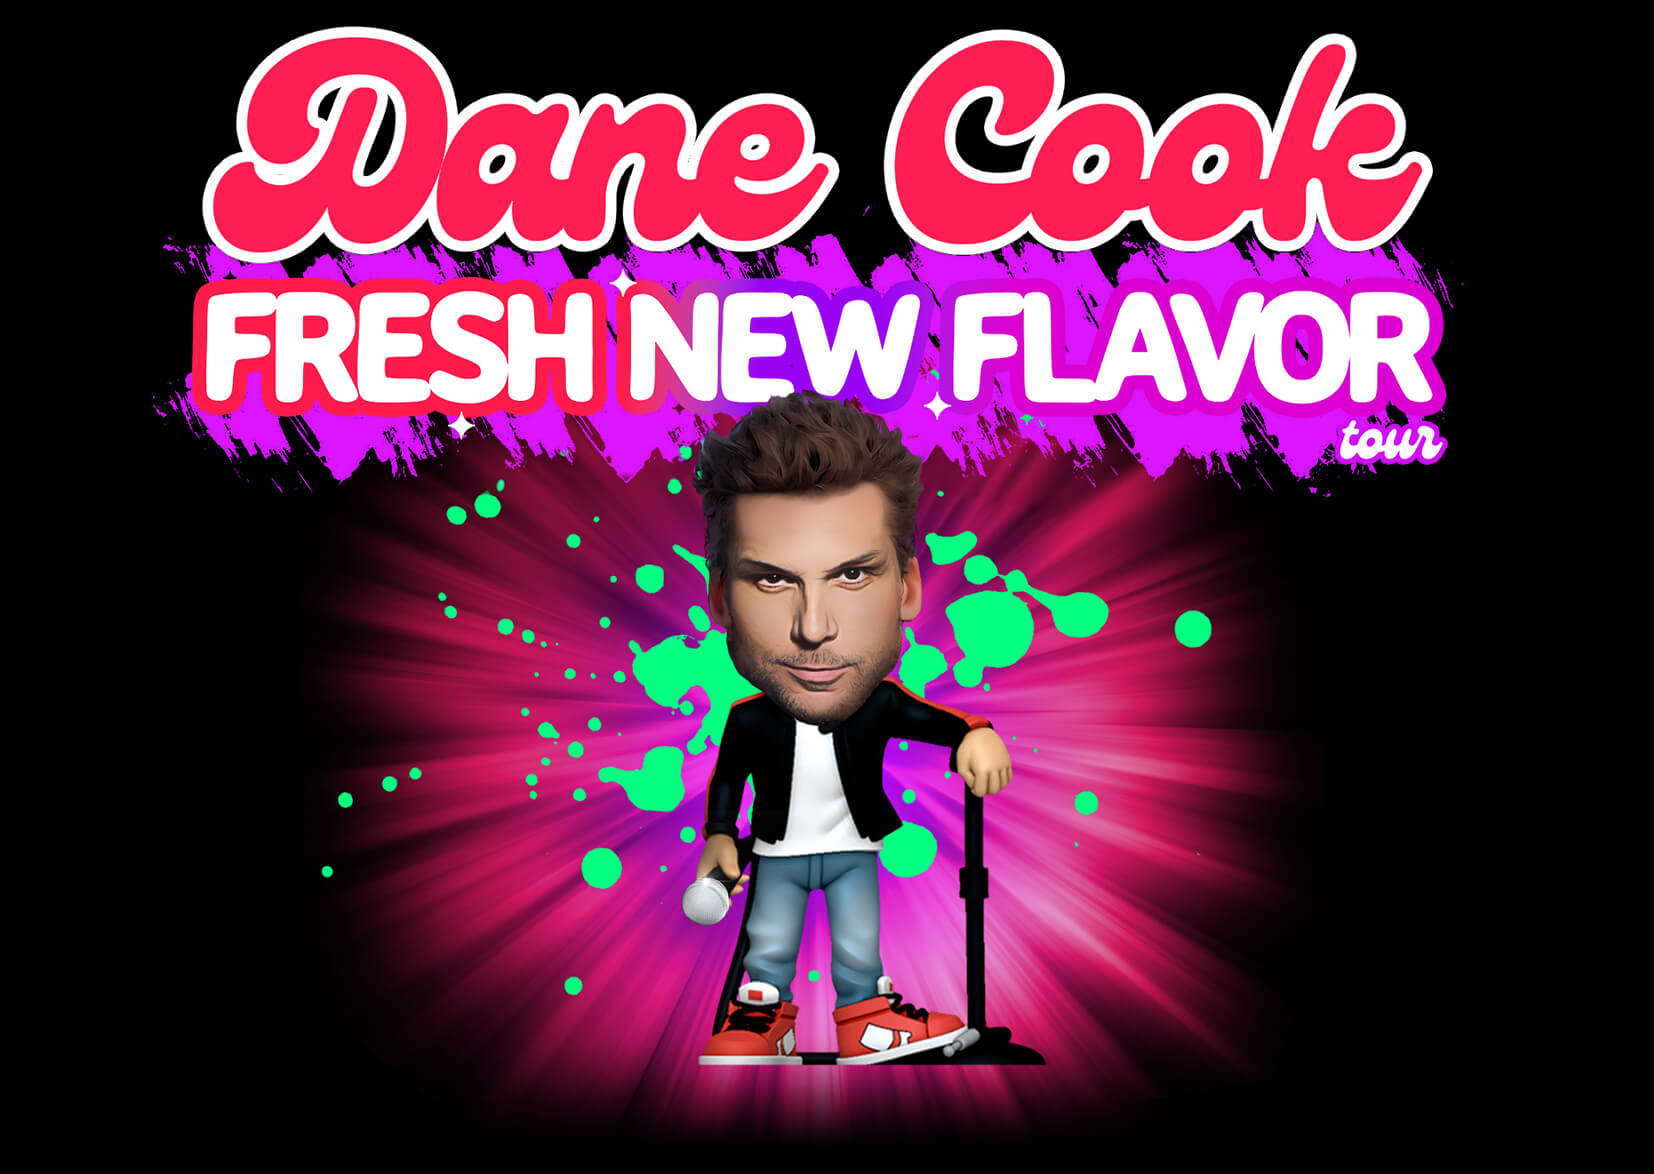 Dane Cook - Fresh New Flavor Tour